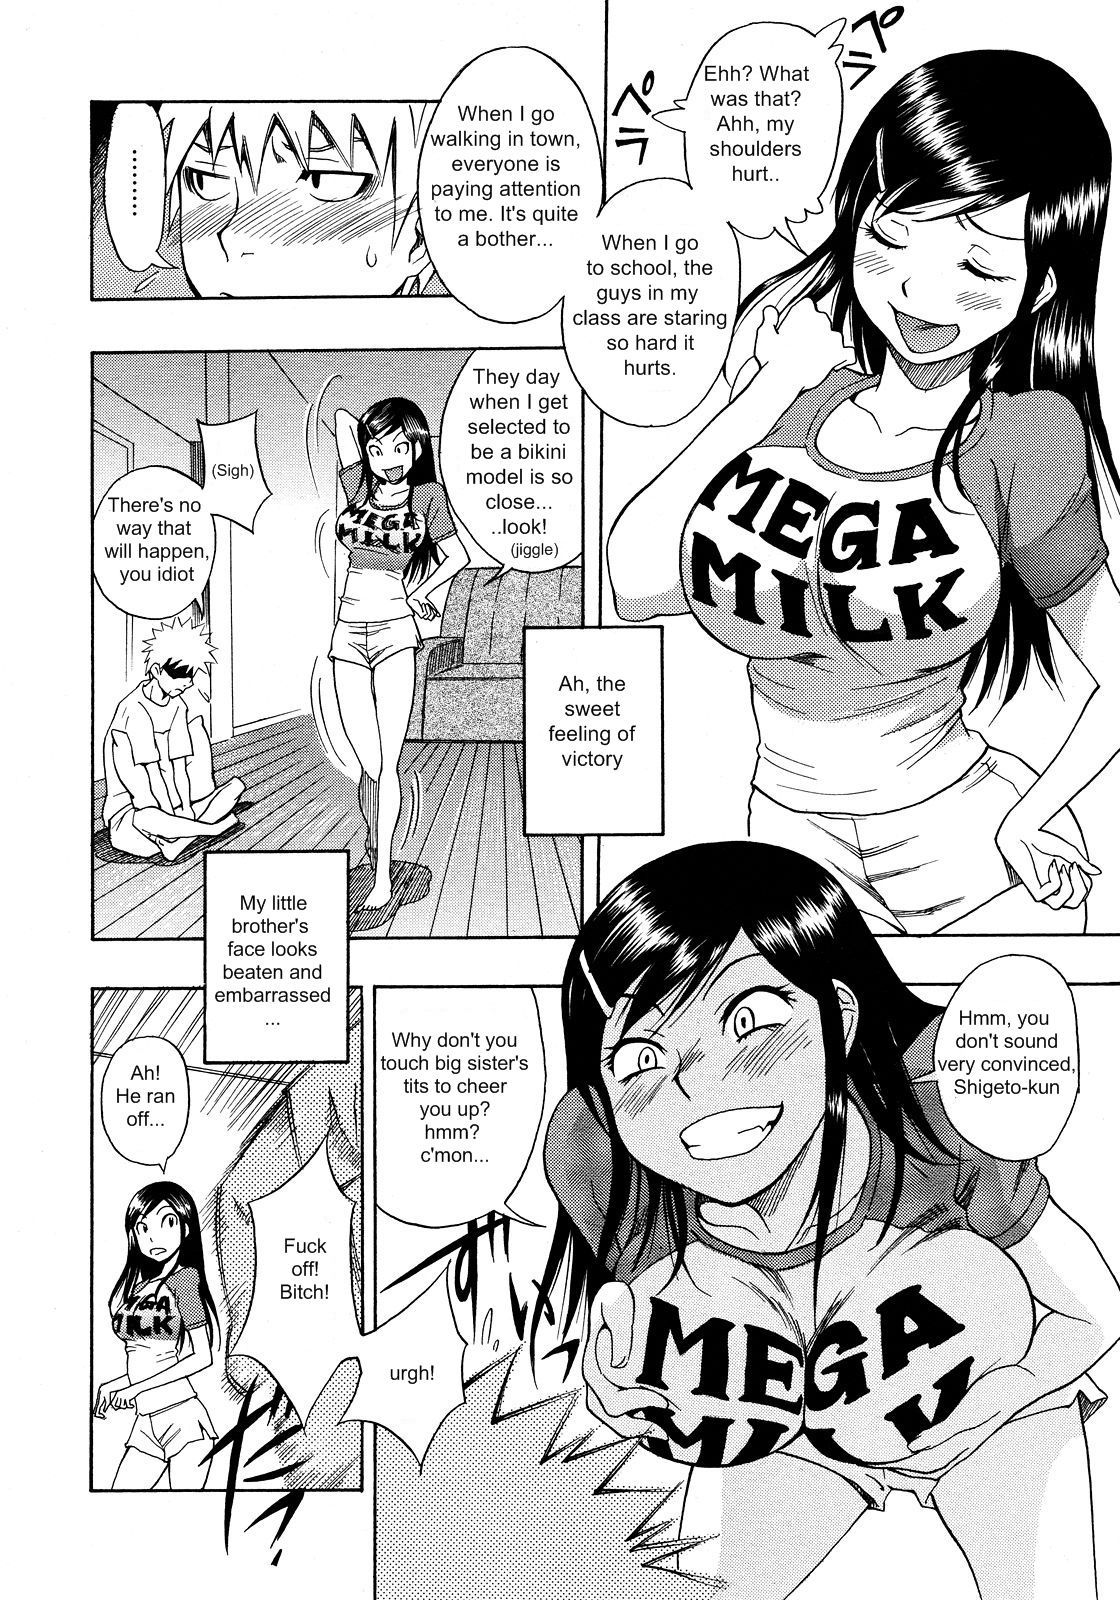 Detector reccomend Mega milk hentai comic